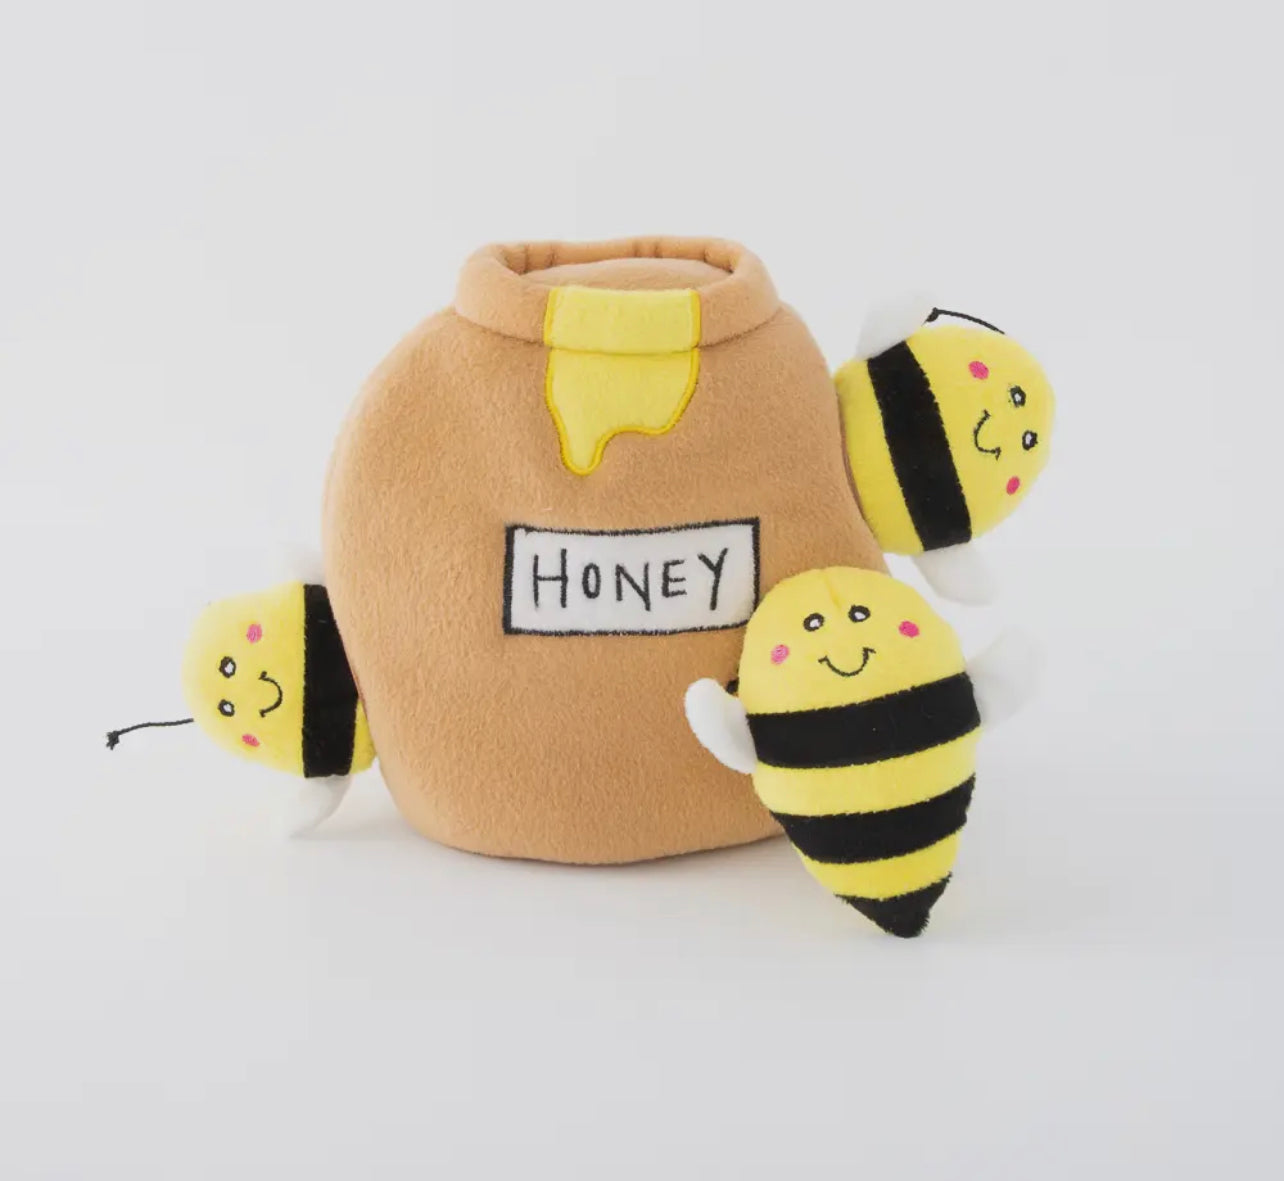 Honey pot burrow toy